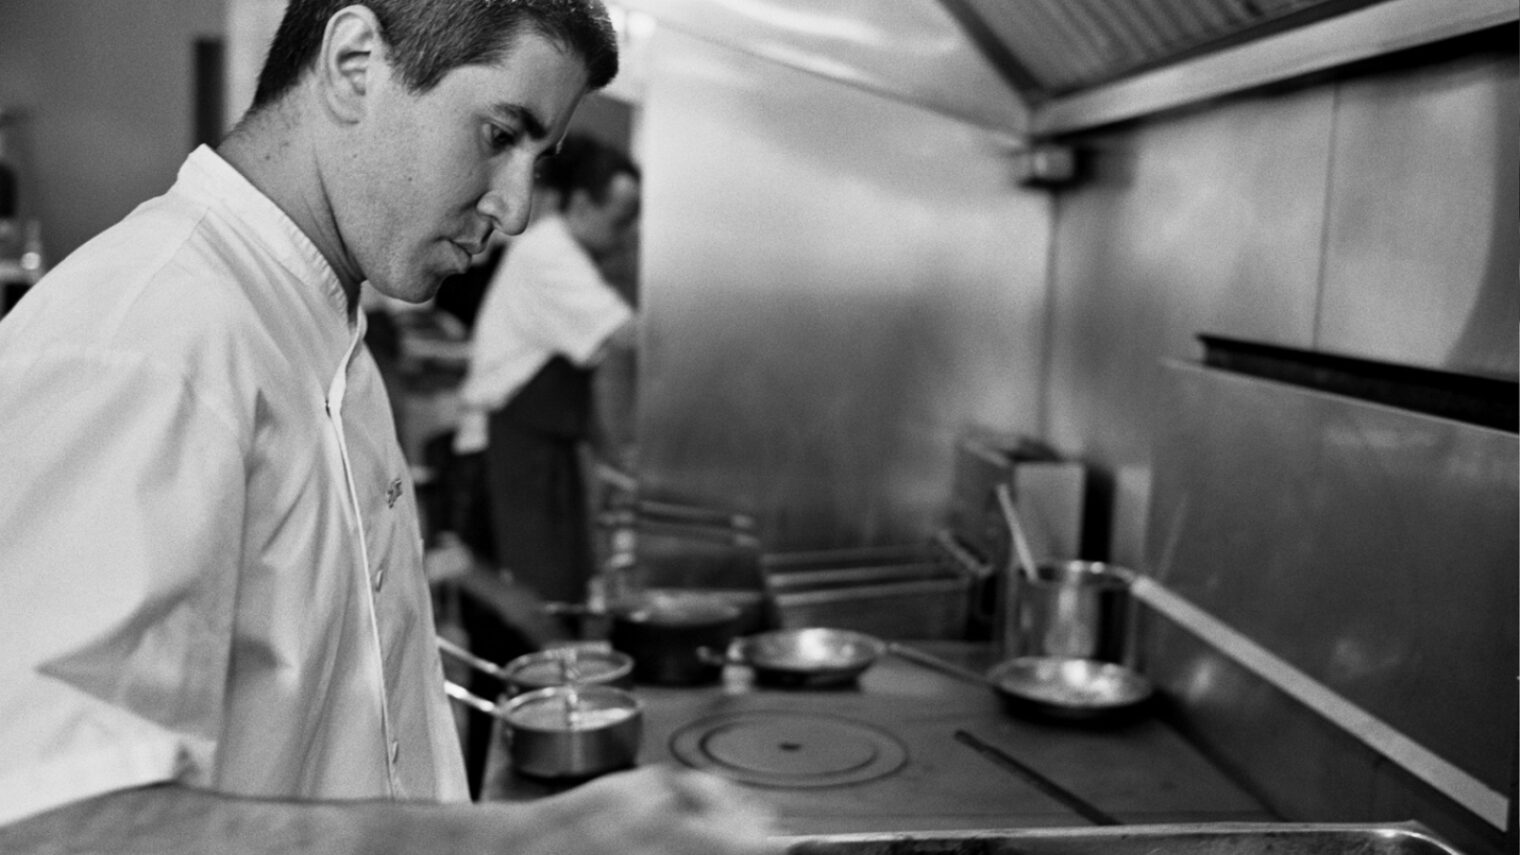 Chef Michael Solomonov at Zahav. Photo by Mike Regan